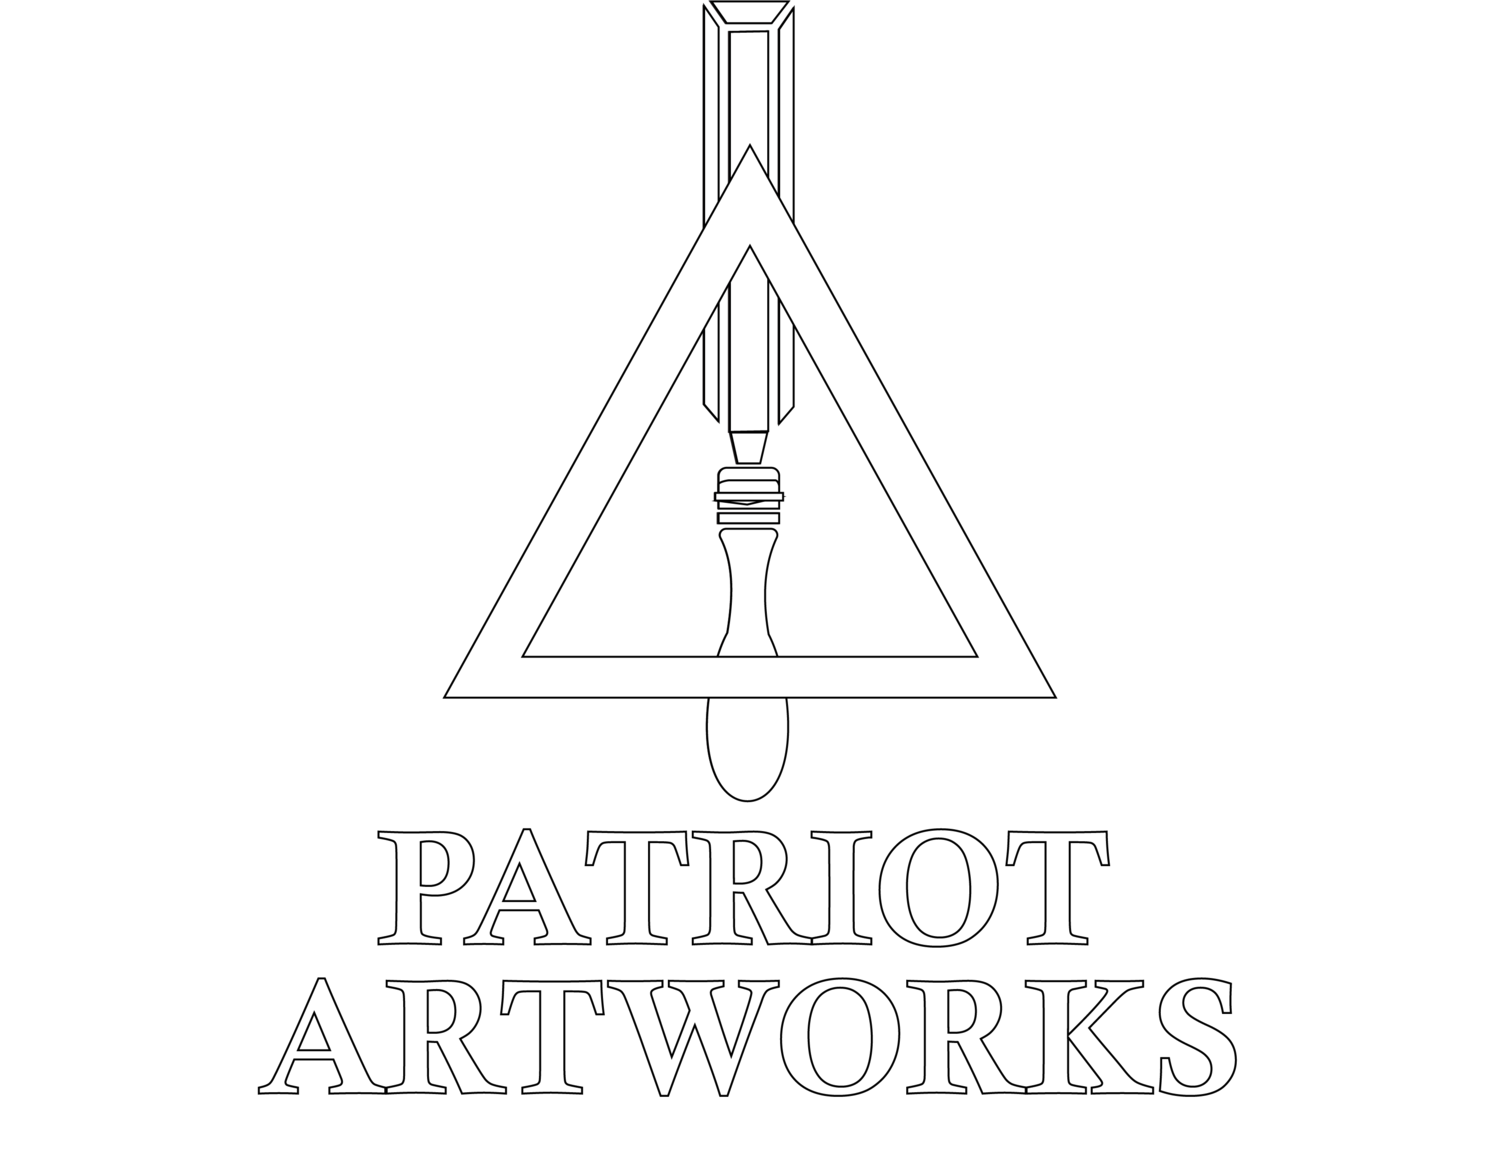 PATRIOT ARTWORKS